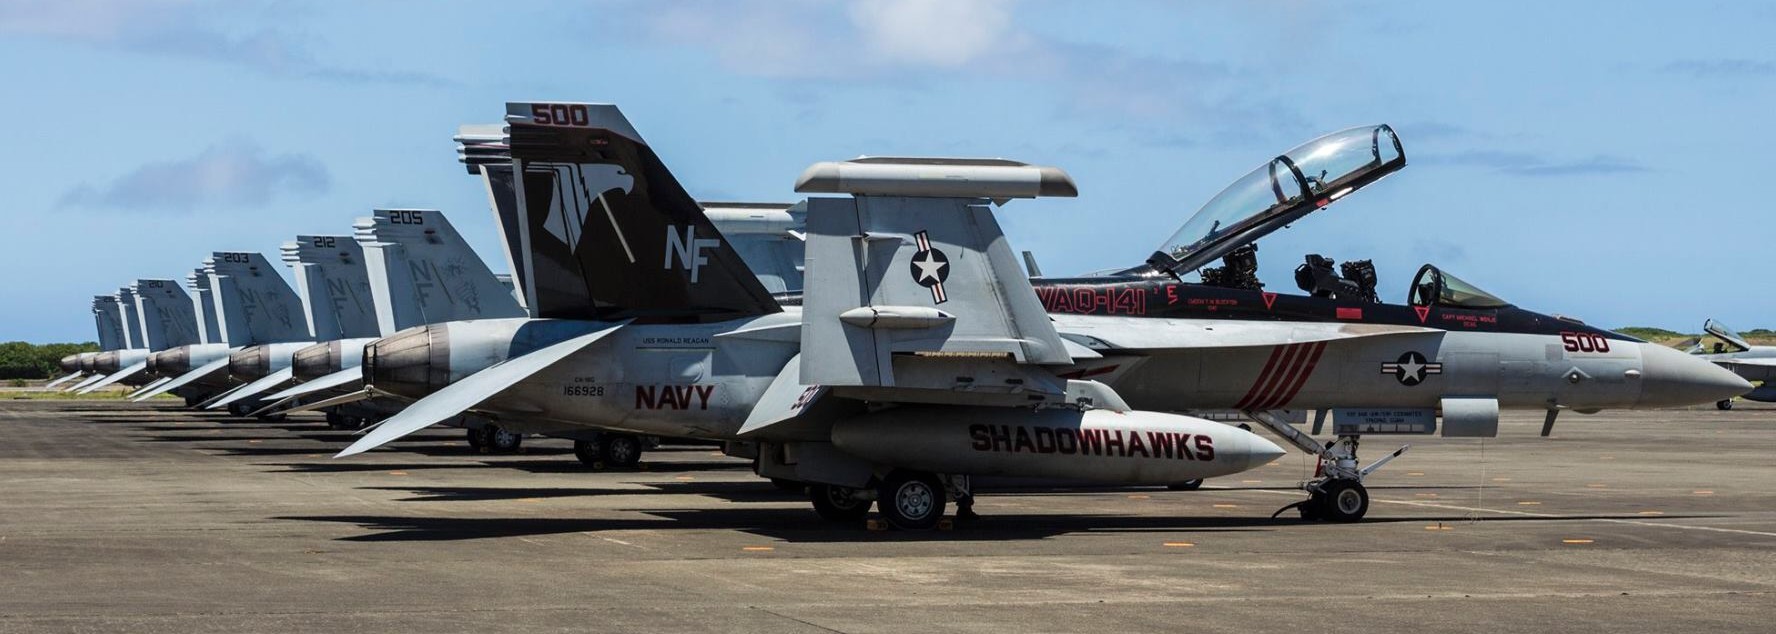 vaq-141 shadowhawks electronic attack squadron boeing ea-18g growler us navy cvw-5 iwo jima to japan 59